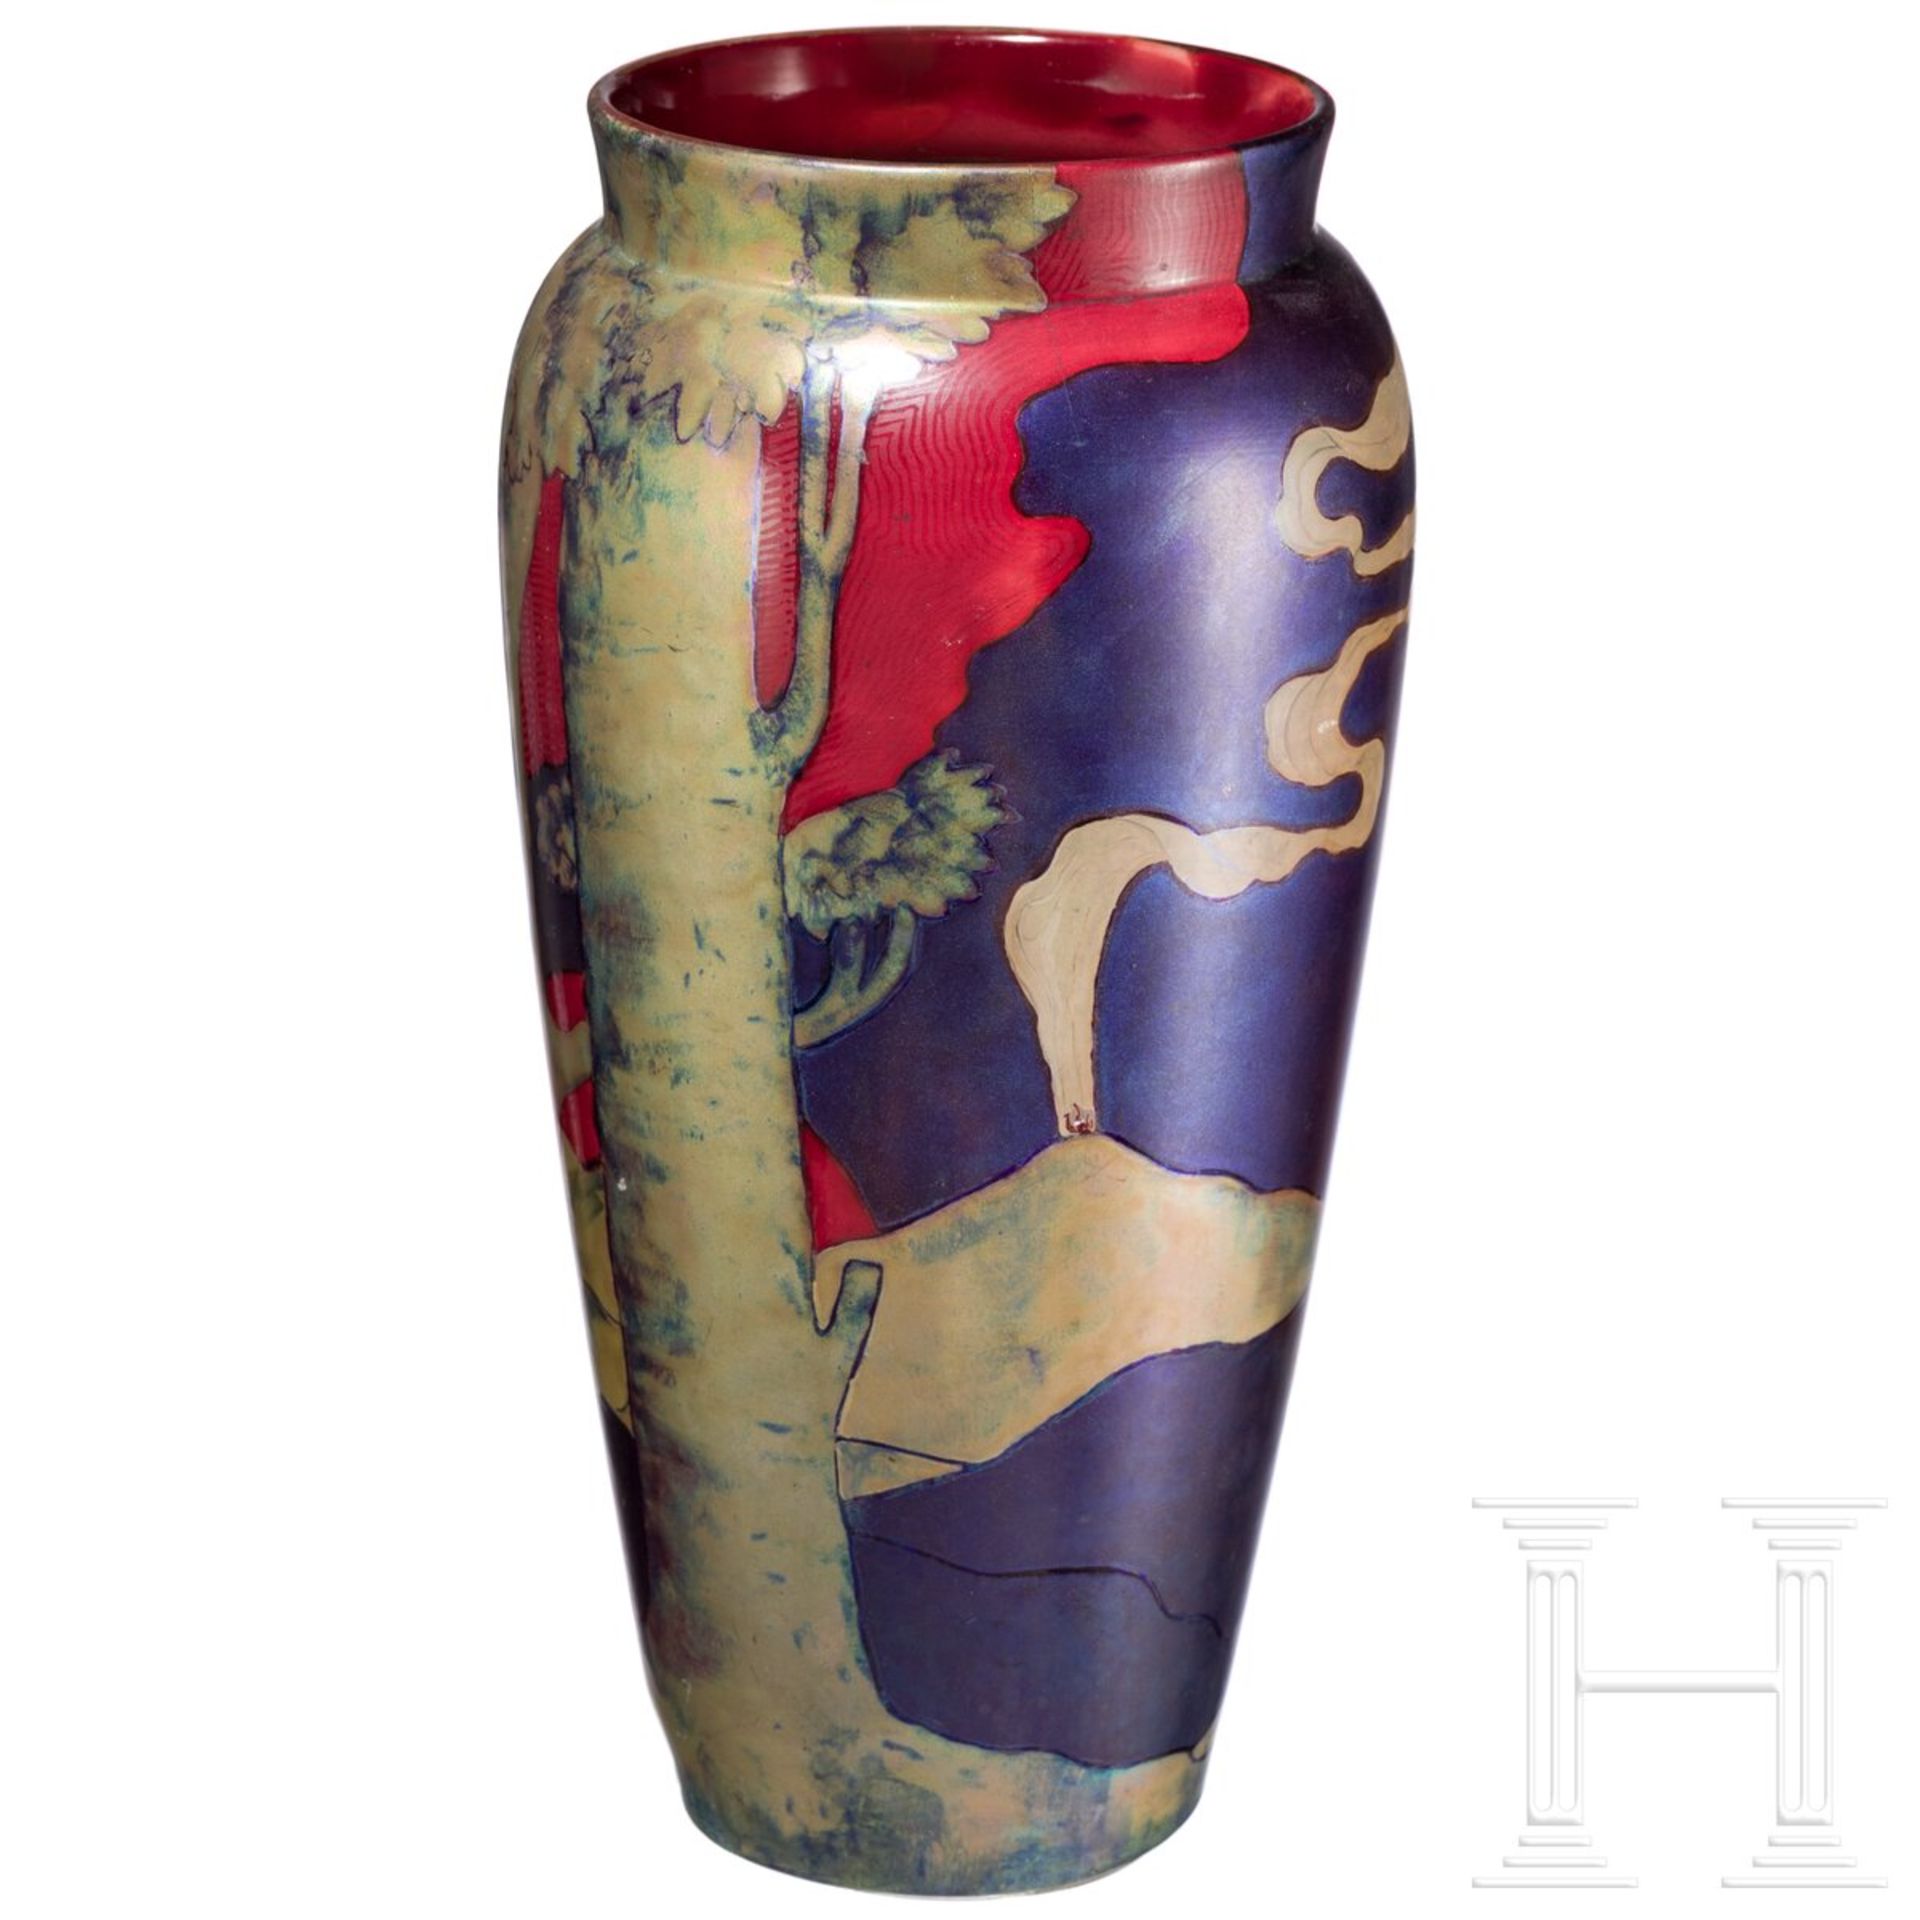 Große Jugendstil-Vase mit Landschaftsszene, Pecs (Fünfkirchen), Zsolnay, Entwurf wohl von Tade Sikor - Image 3 of 6